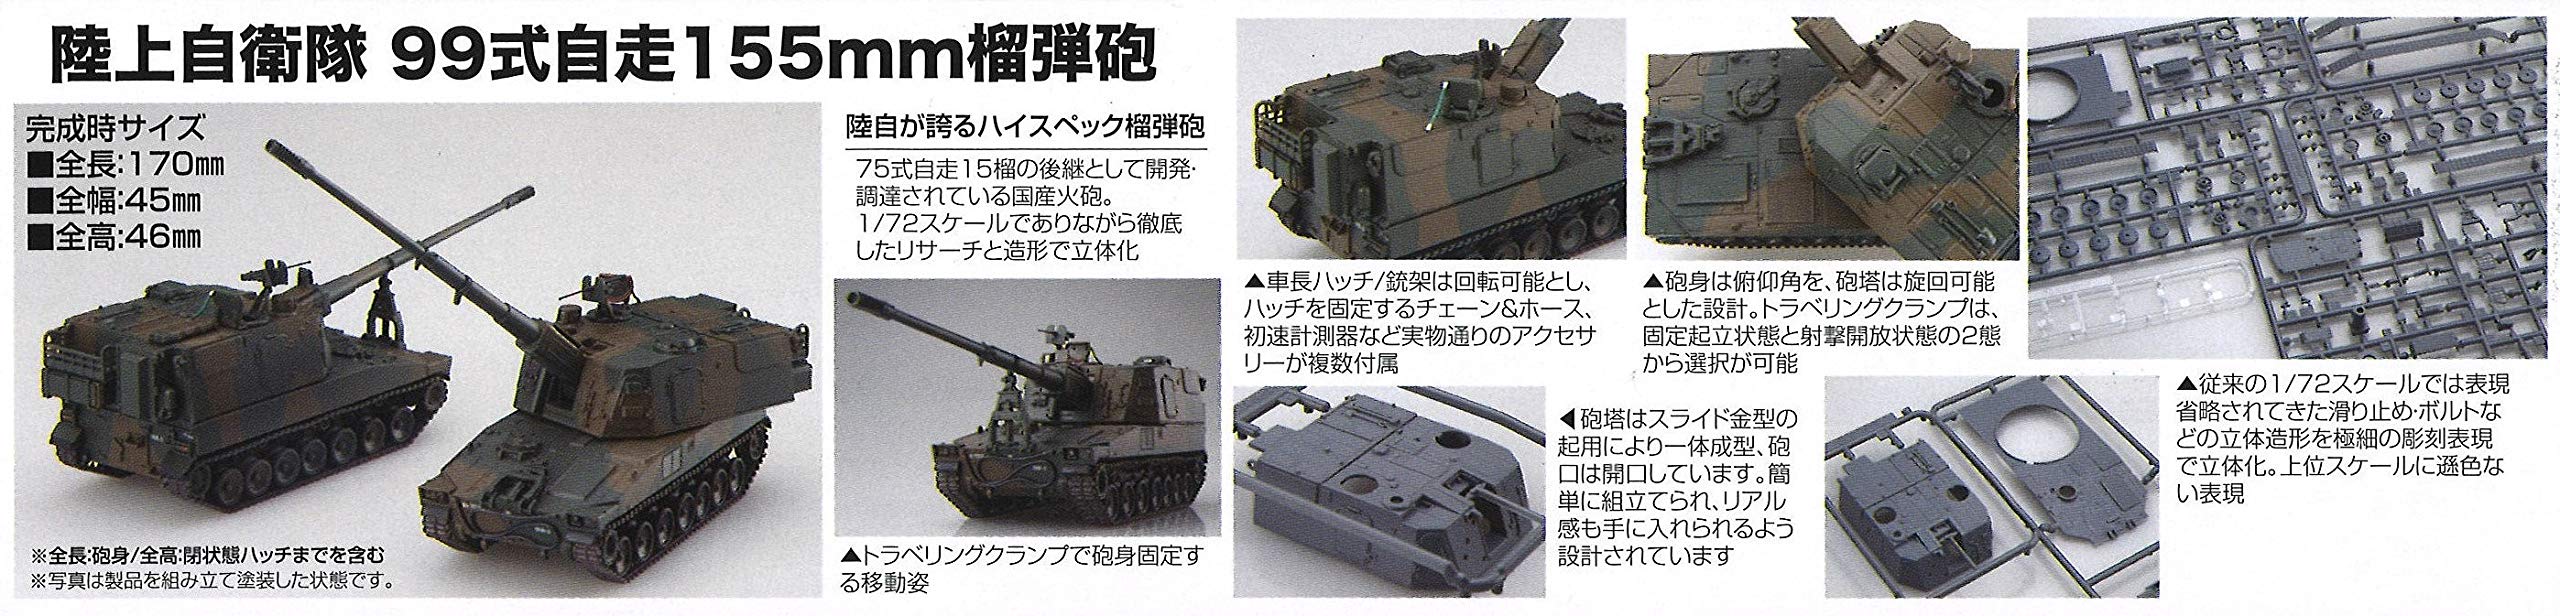 Fujimi 1/72 Military Series No.11 Ground Self-Defense Force Type 99 Kit 72M-11_3